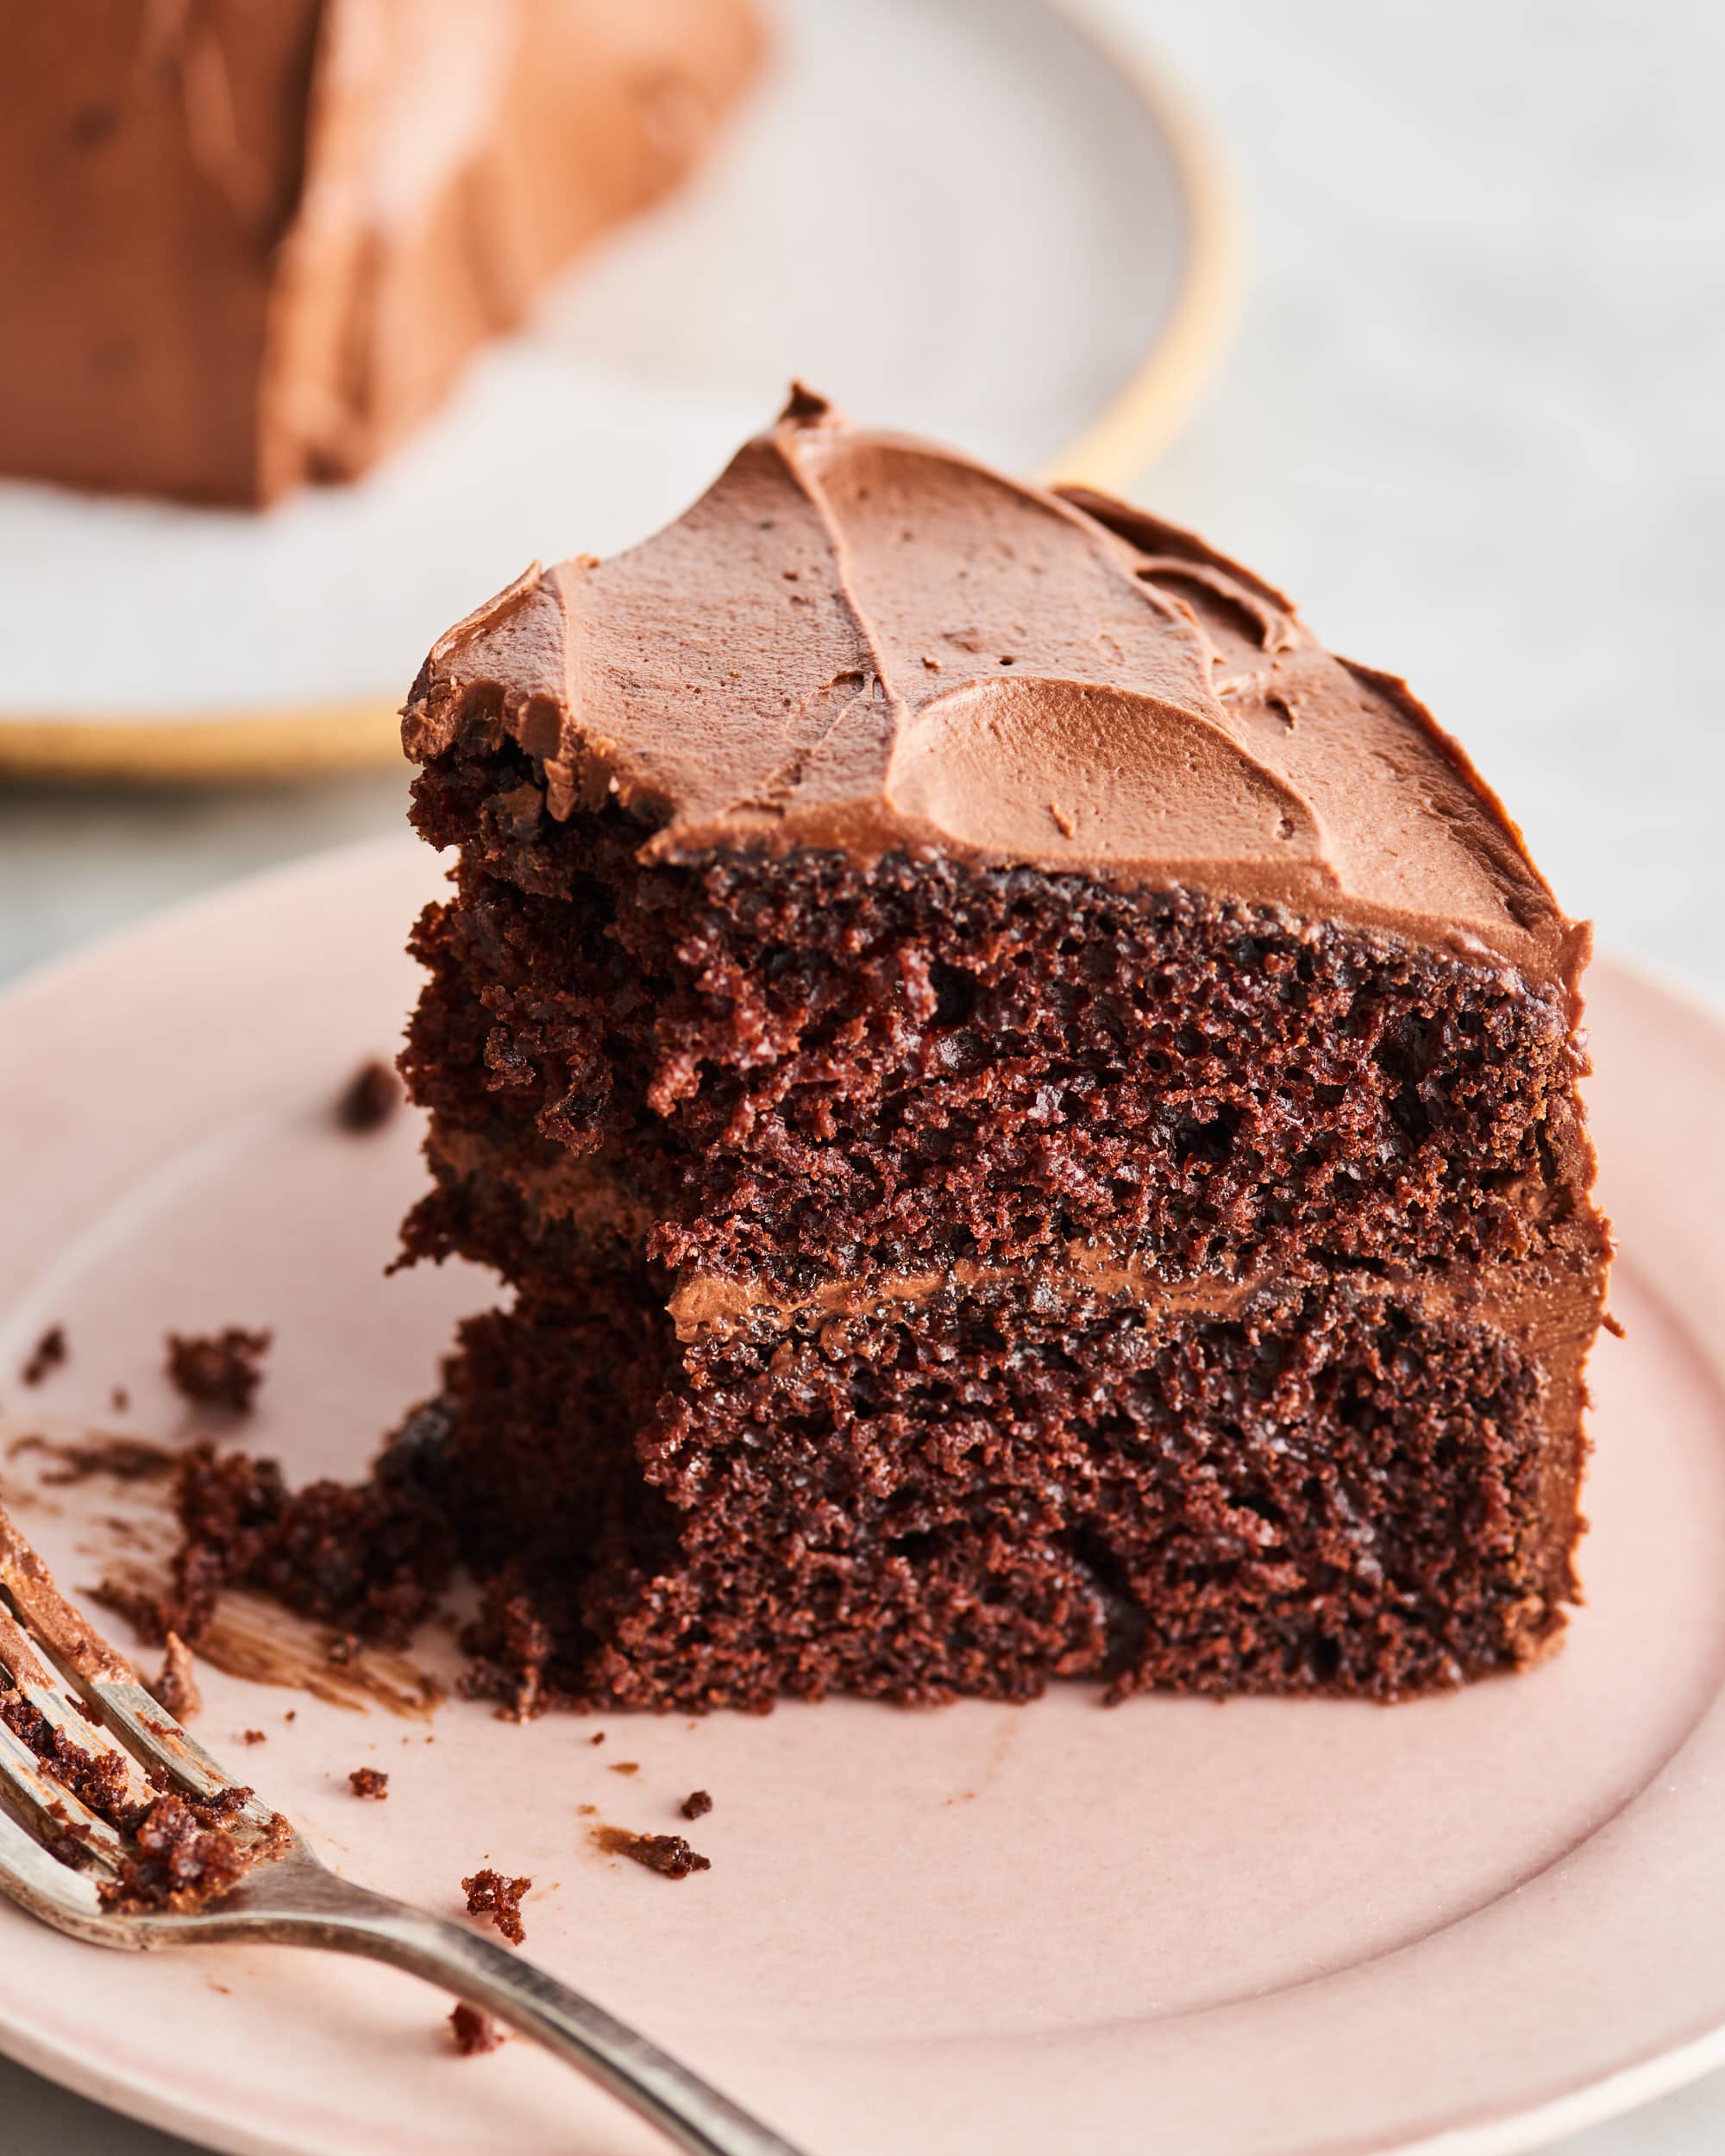 https://cdn.apartmenttherapy.info/image/upload/v1579906415/k/Photo/Series/2020-02-Battle-Chocolate-Cake/Battle-Chocolate-Cake_Add-a-Pinch/Battle-Chocolate-Cake_Add-a-Pinch_131.jpg